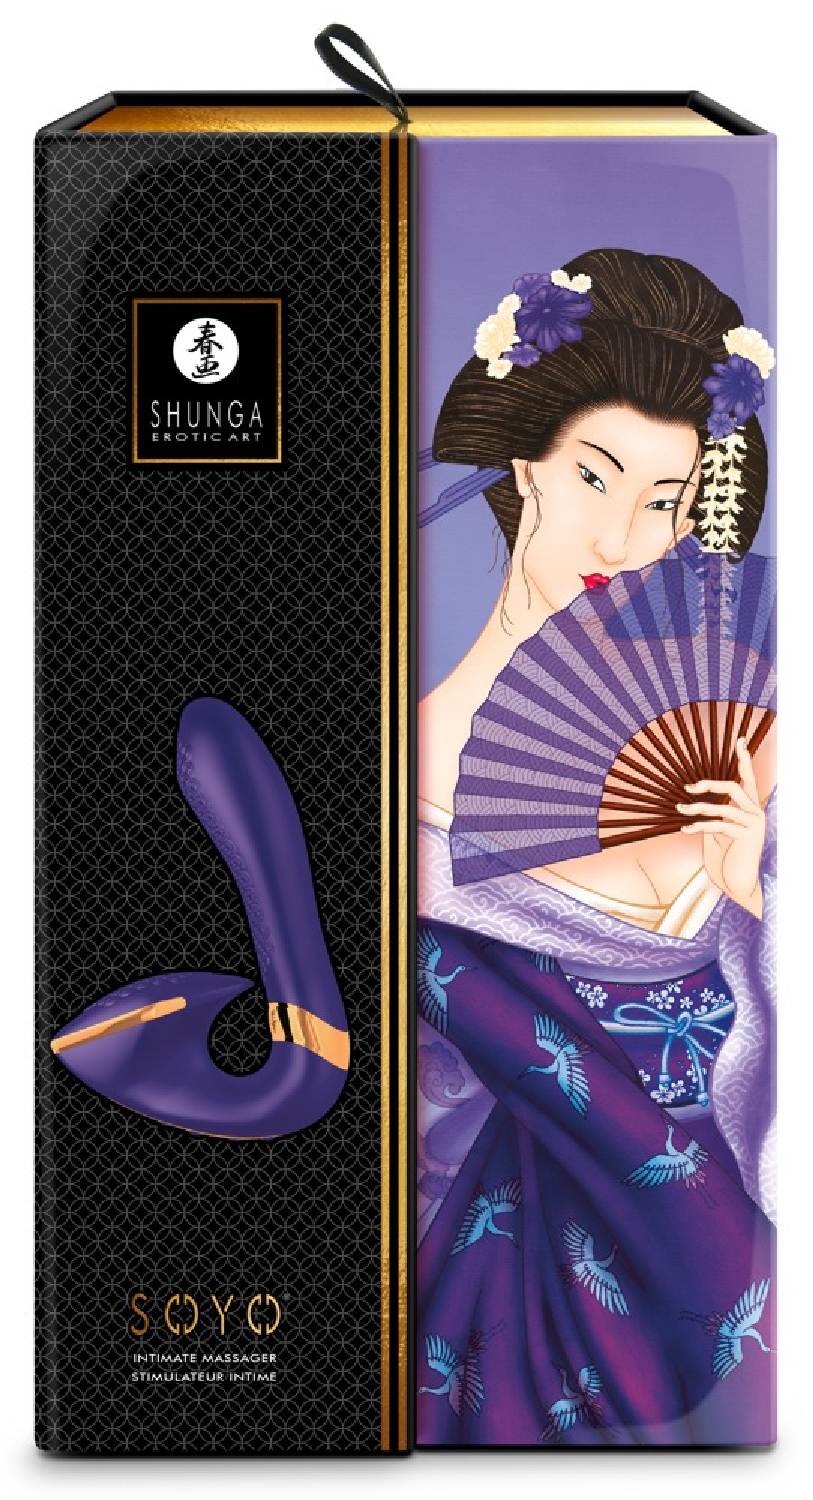 Shunga SOYO Intimate Massager Purple Luksusowa seria do gry wstÄ™pnej dla par